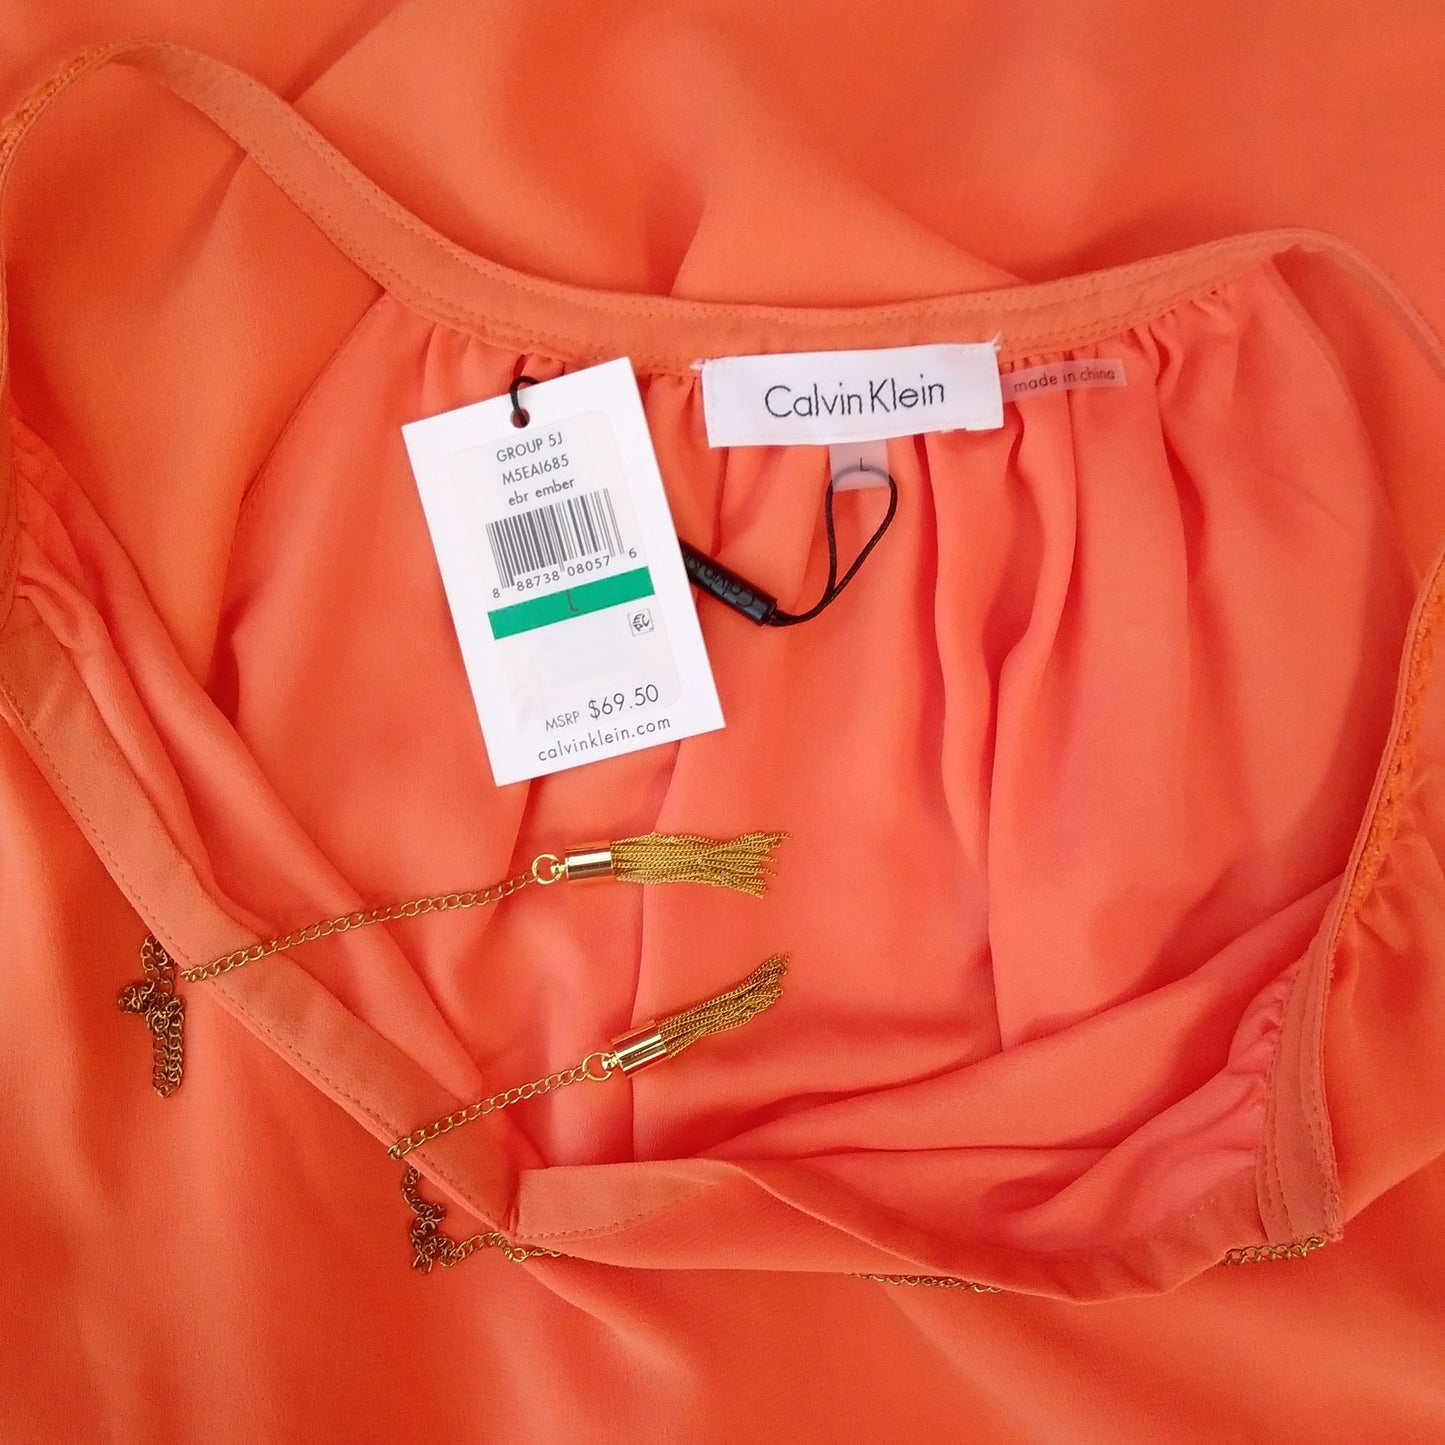 NWT - Calvin Klein Women's Orange Sleeveless Top with Gold Tassels - Size: L